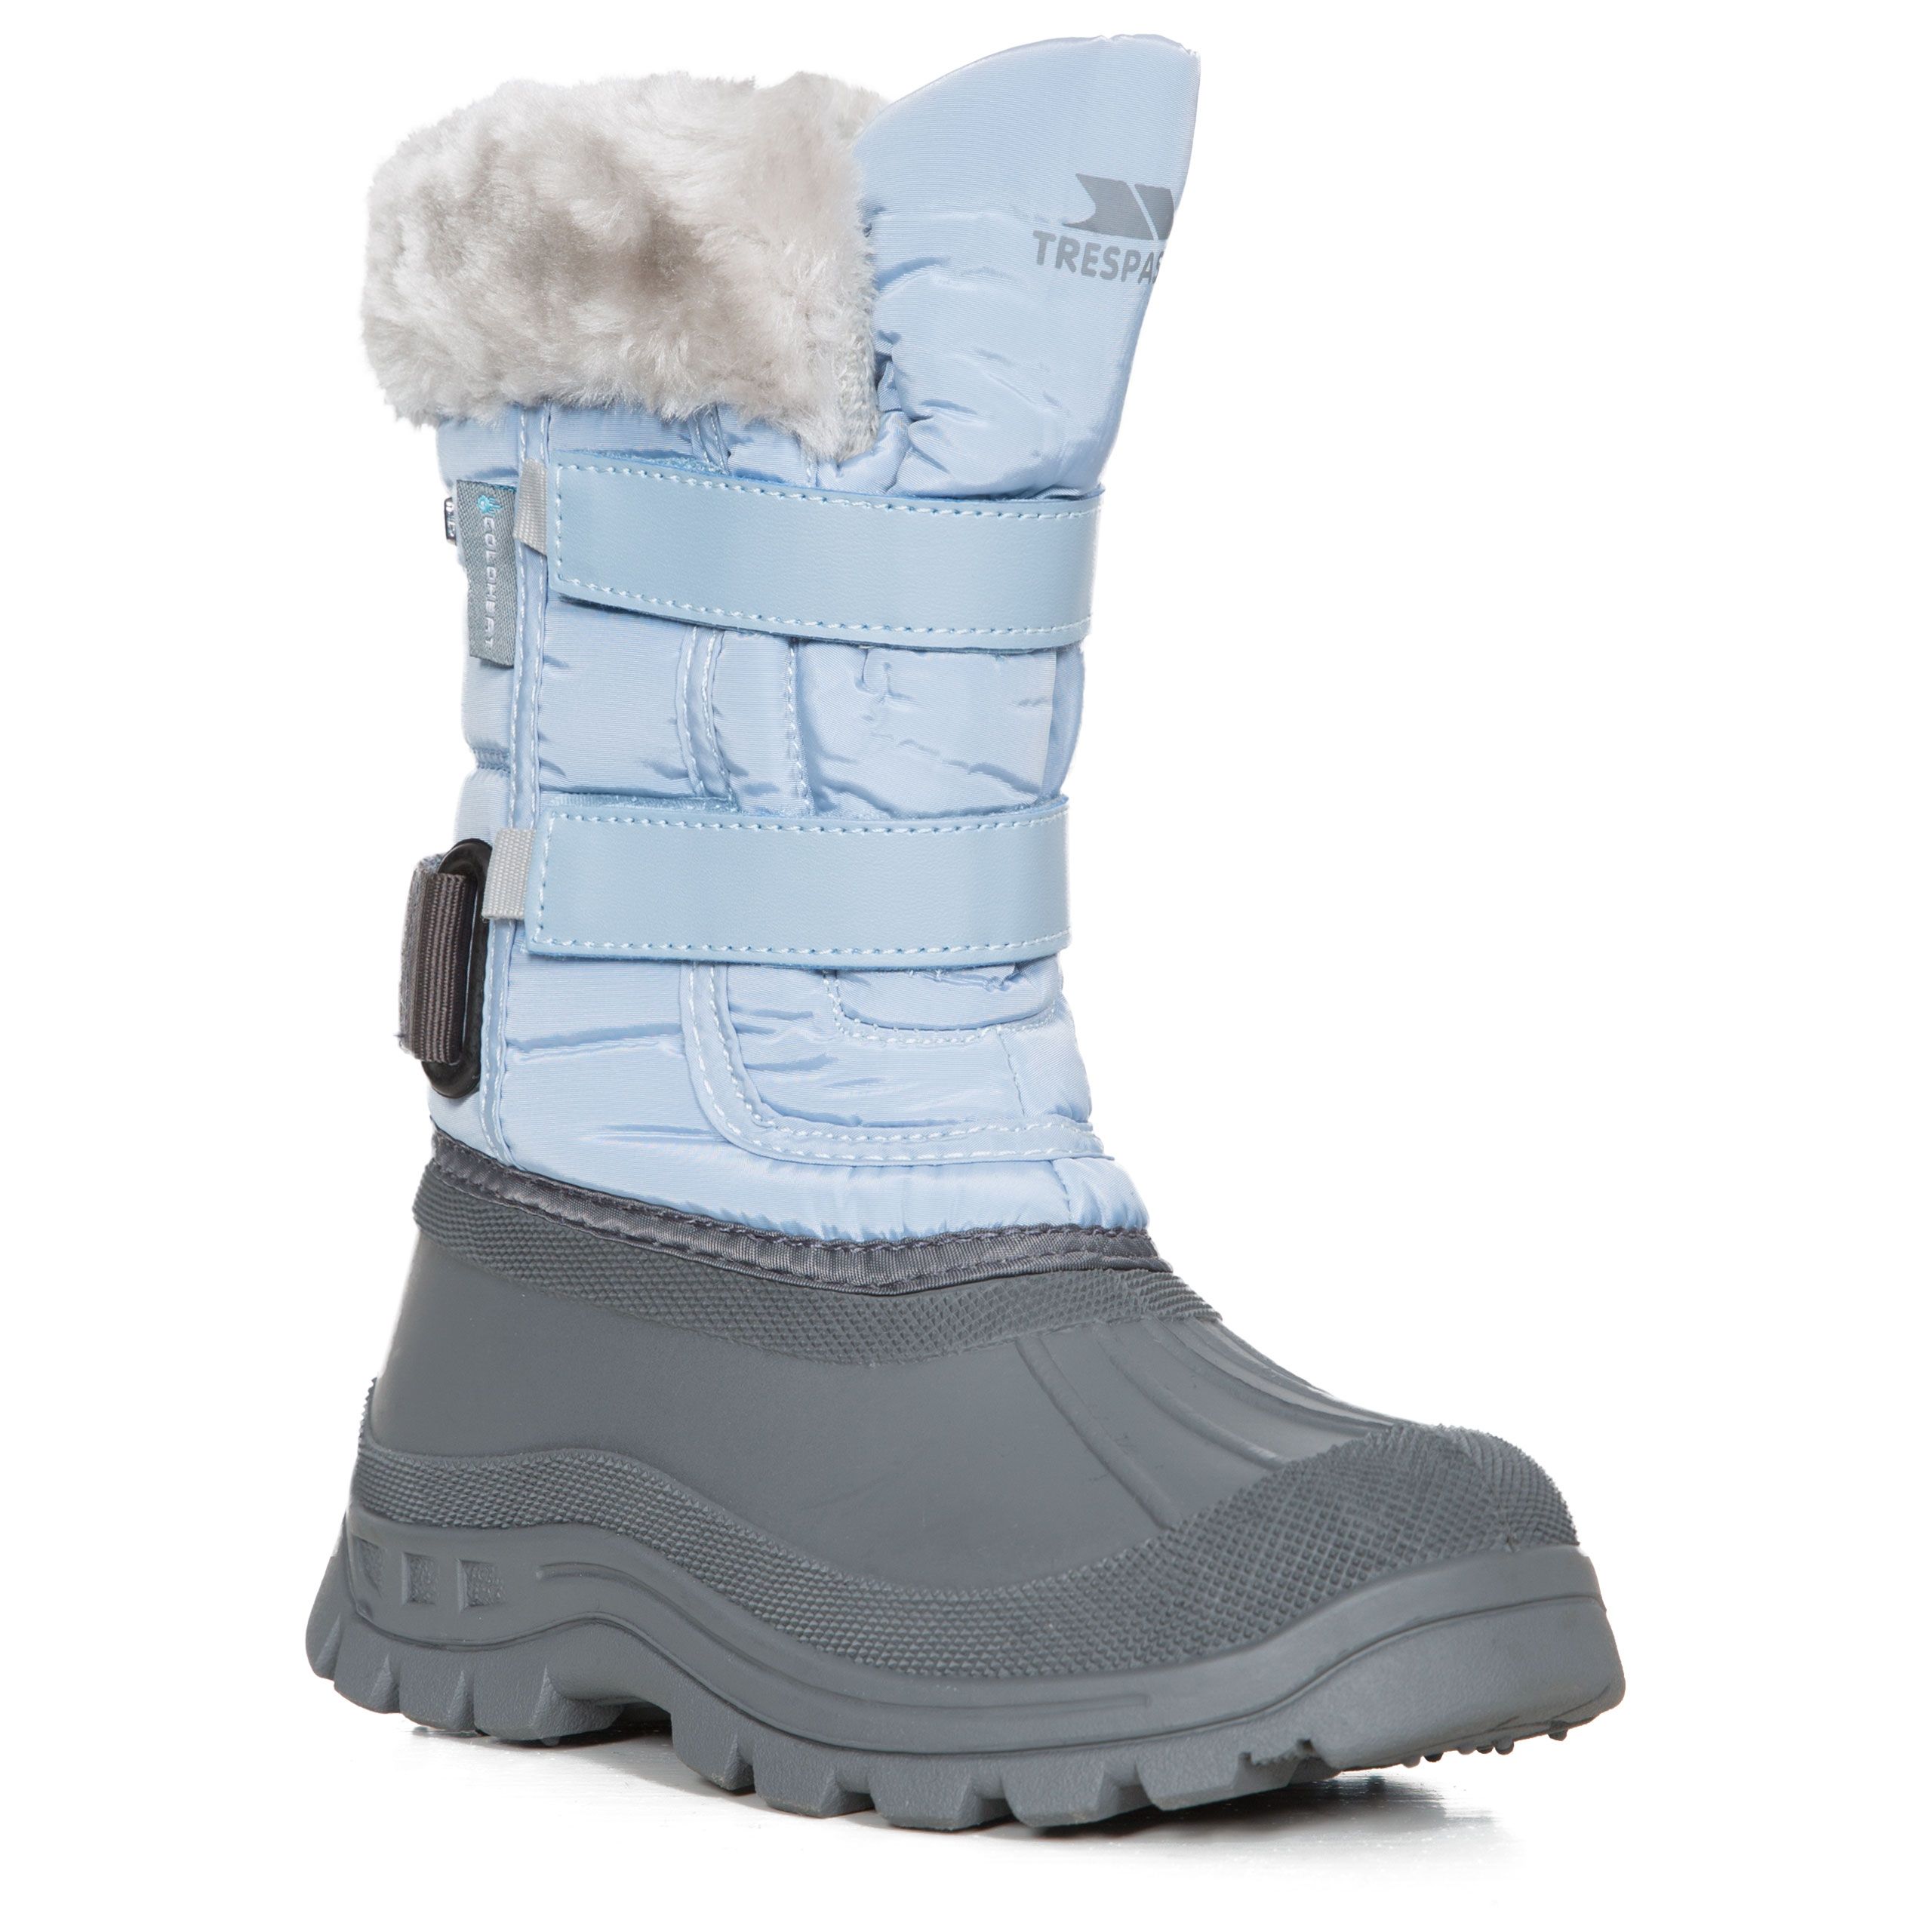 Stroma Ii Girls Fleece Lined Snow Boots